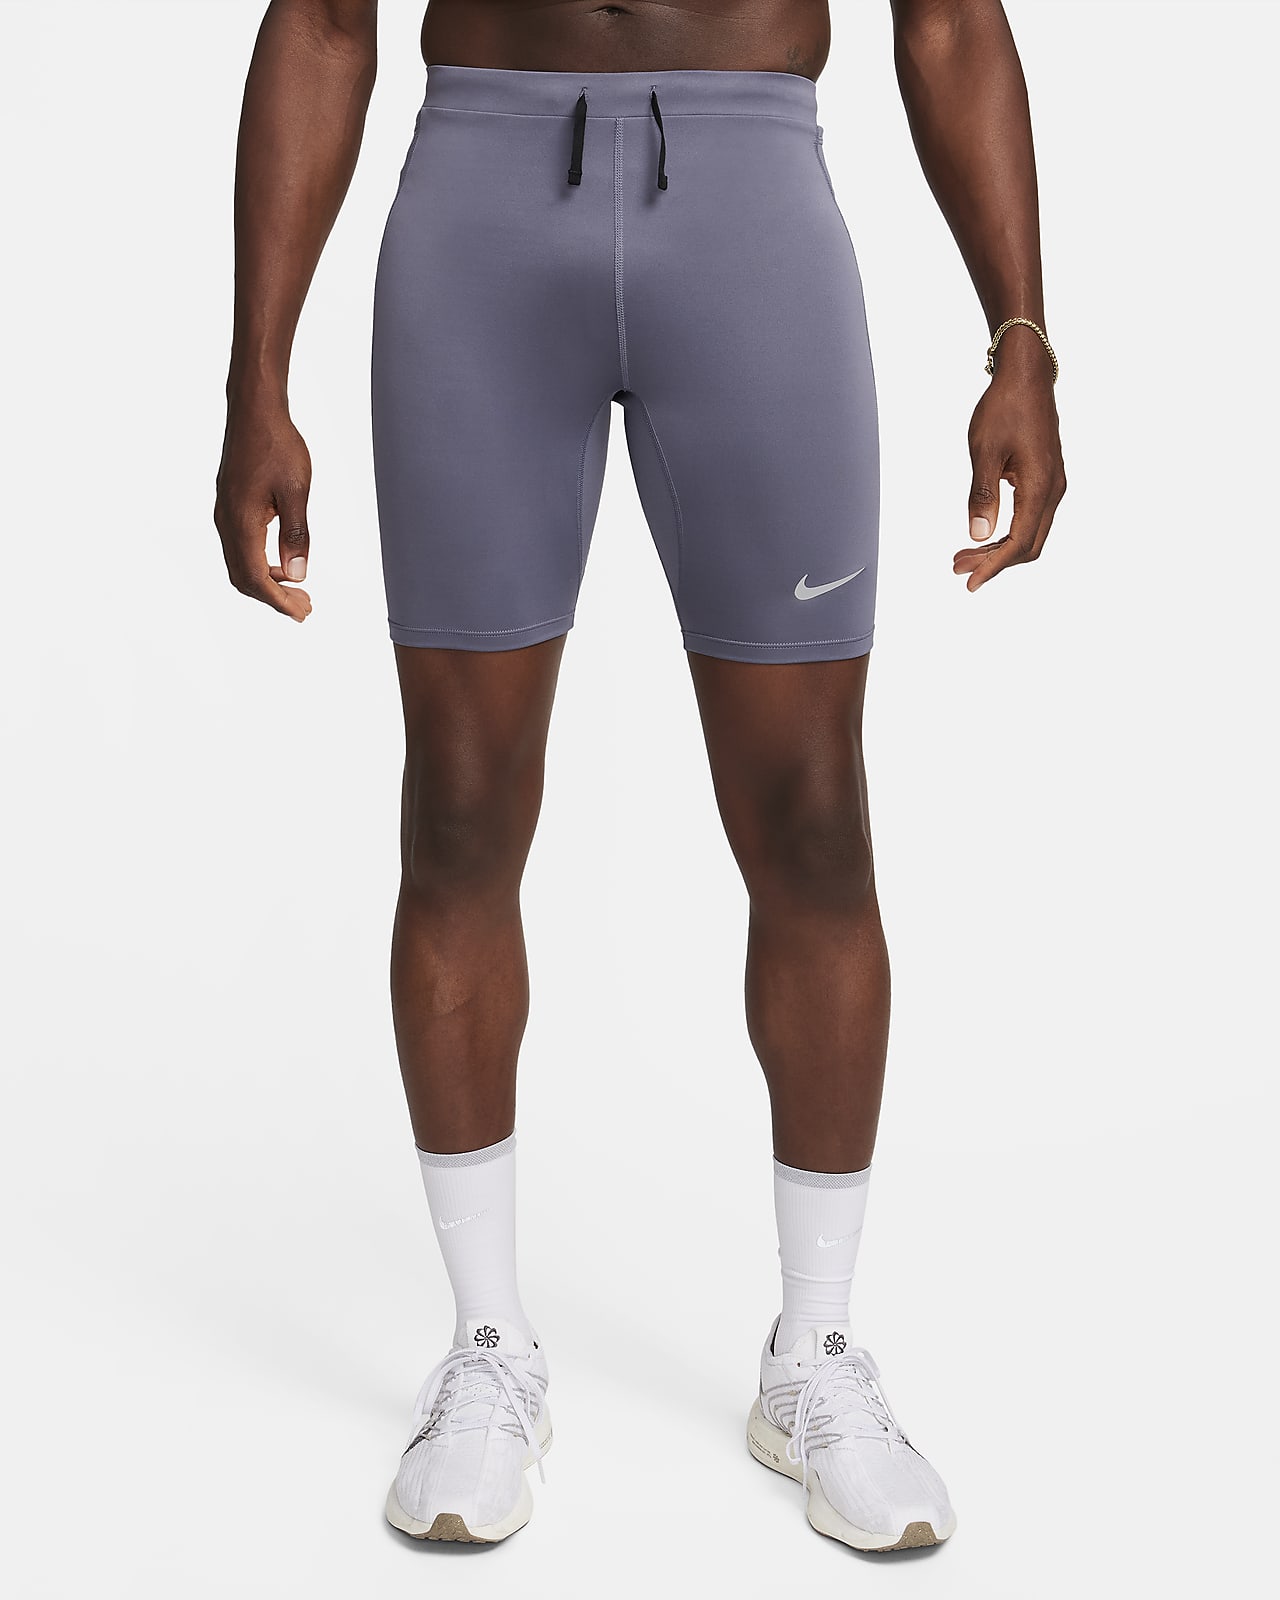 Nike Fast Malles de running Dri-FIT de mitja longitud amb eslip integrat - Home